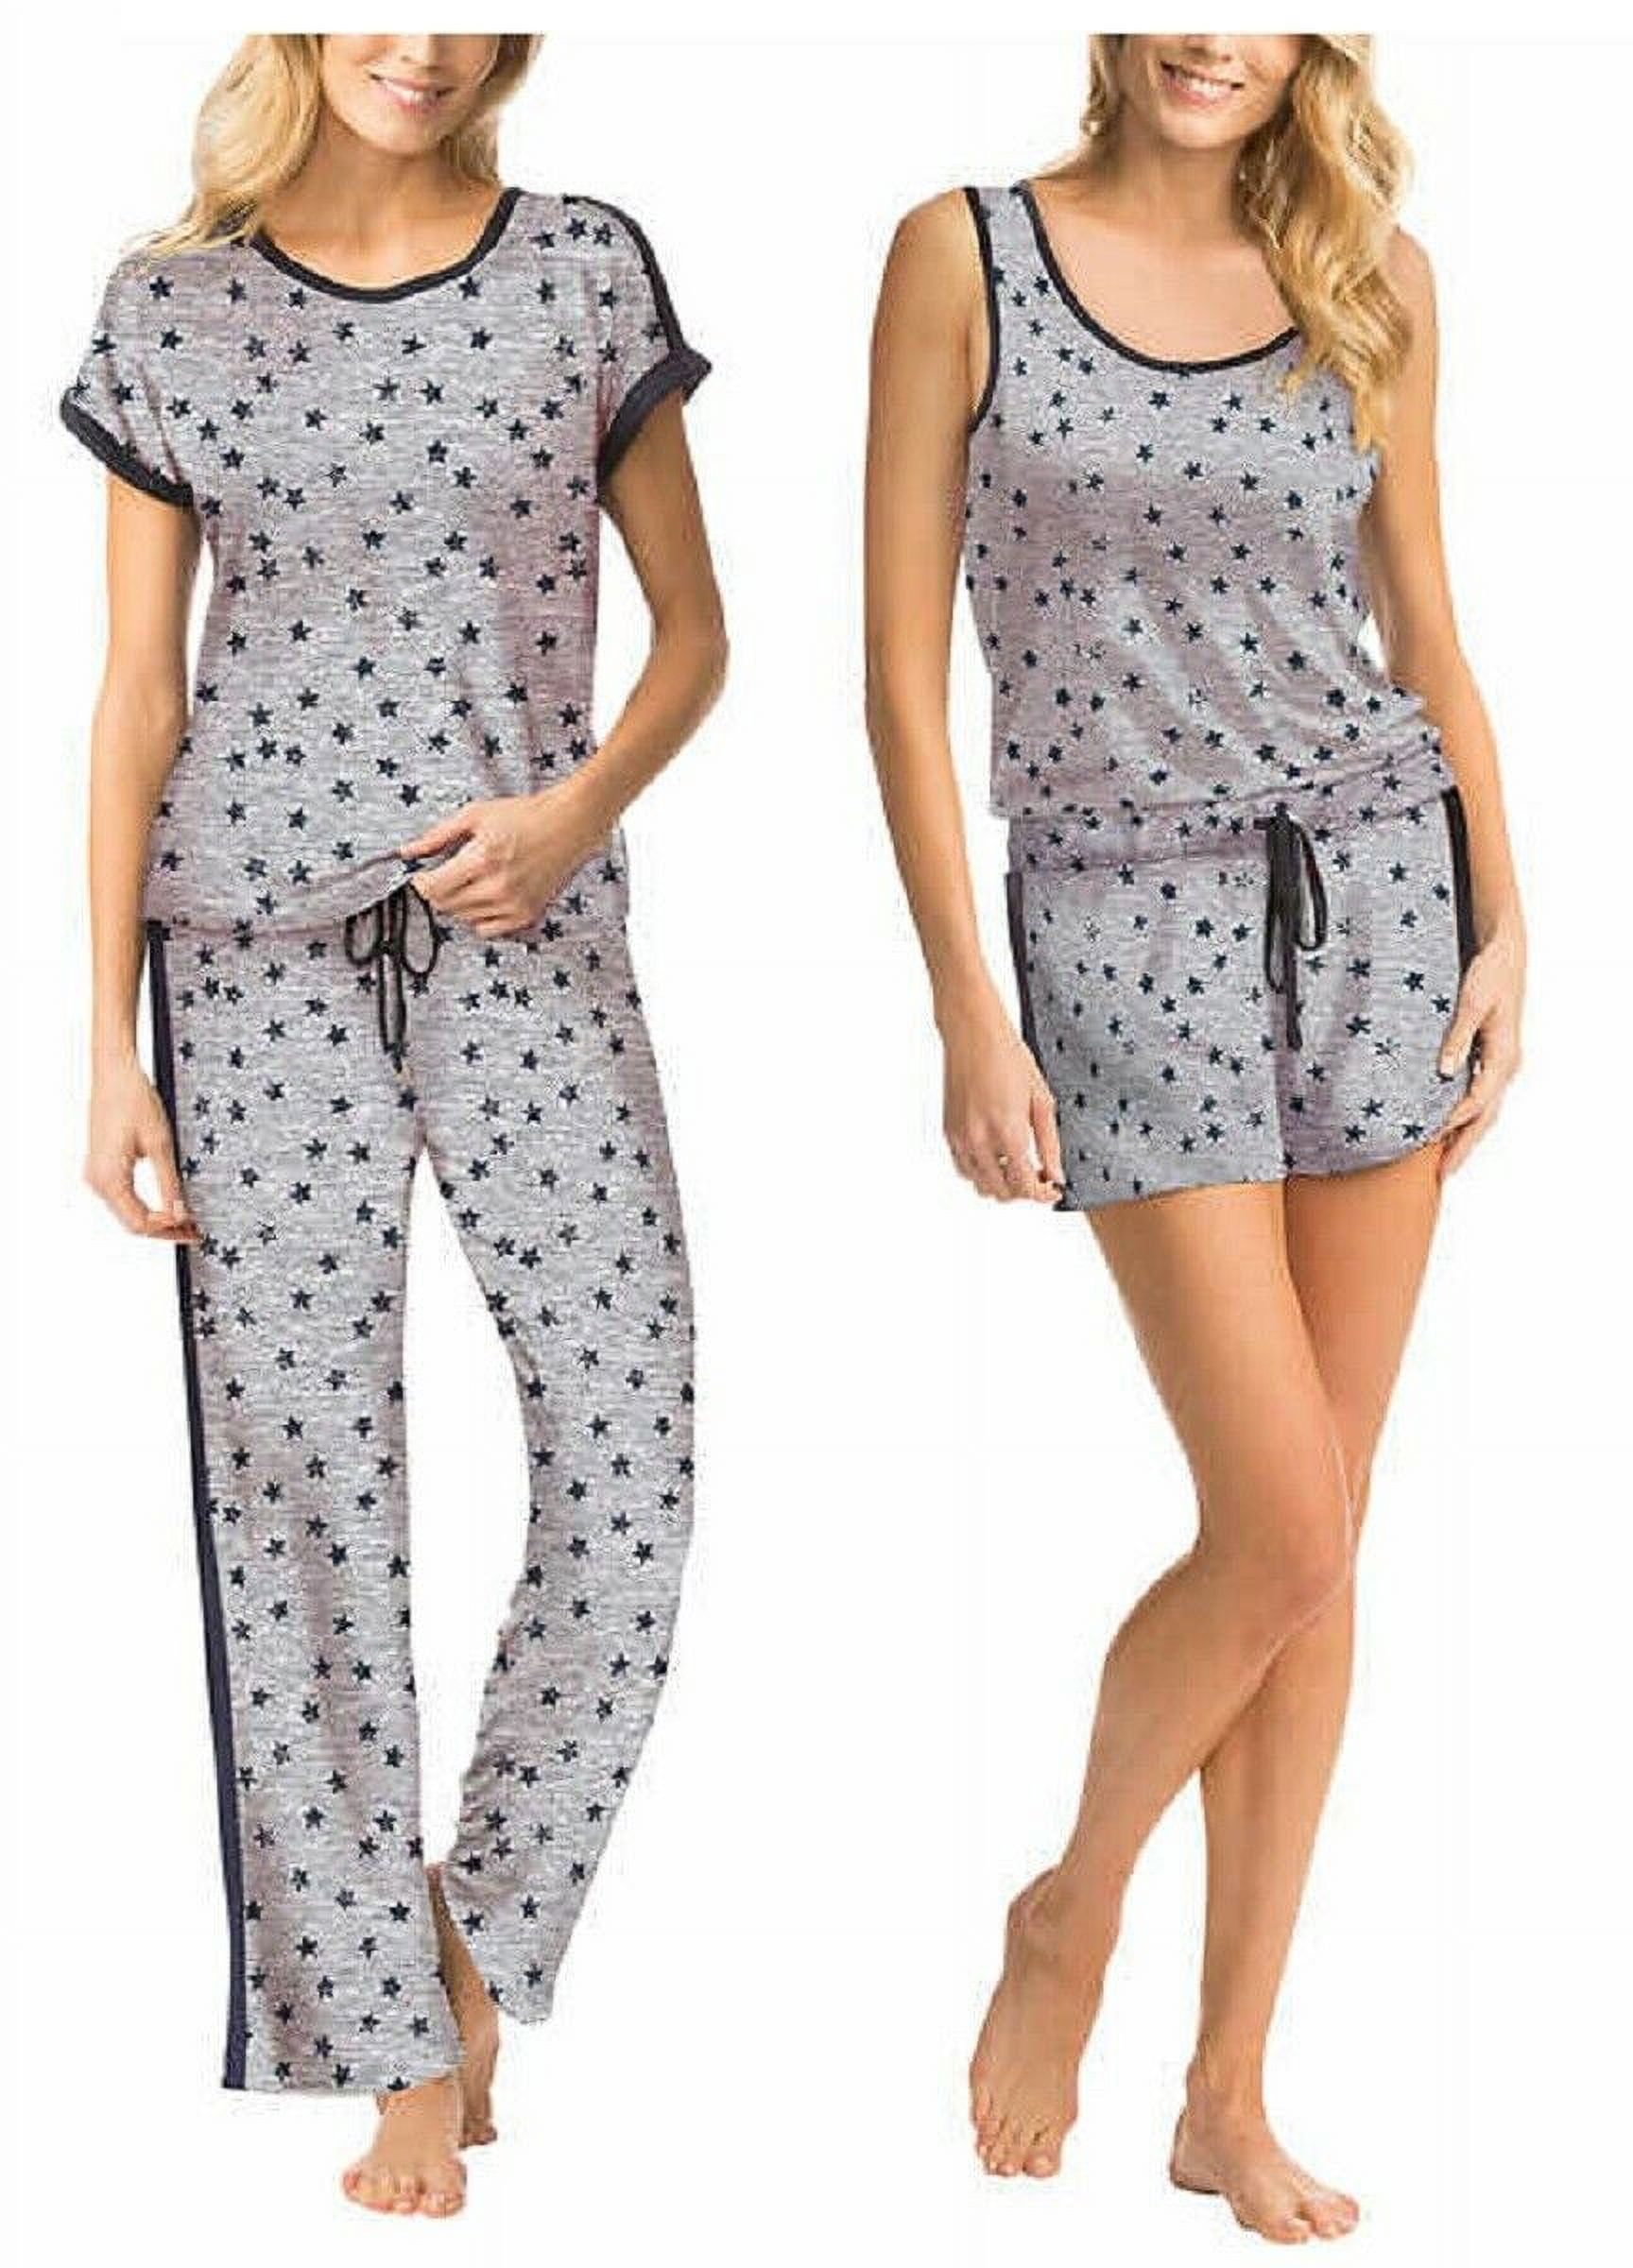 Lucky Brand Ladies' 4 piece PJ Set Nightwear (Grey Star, Large)